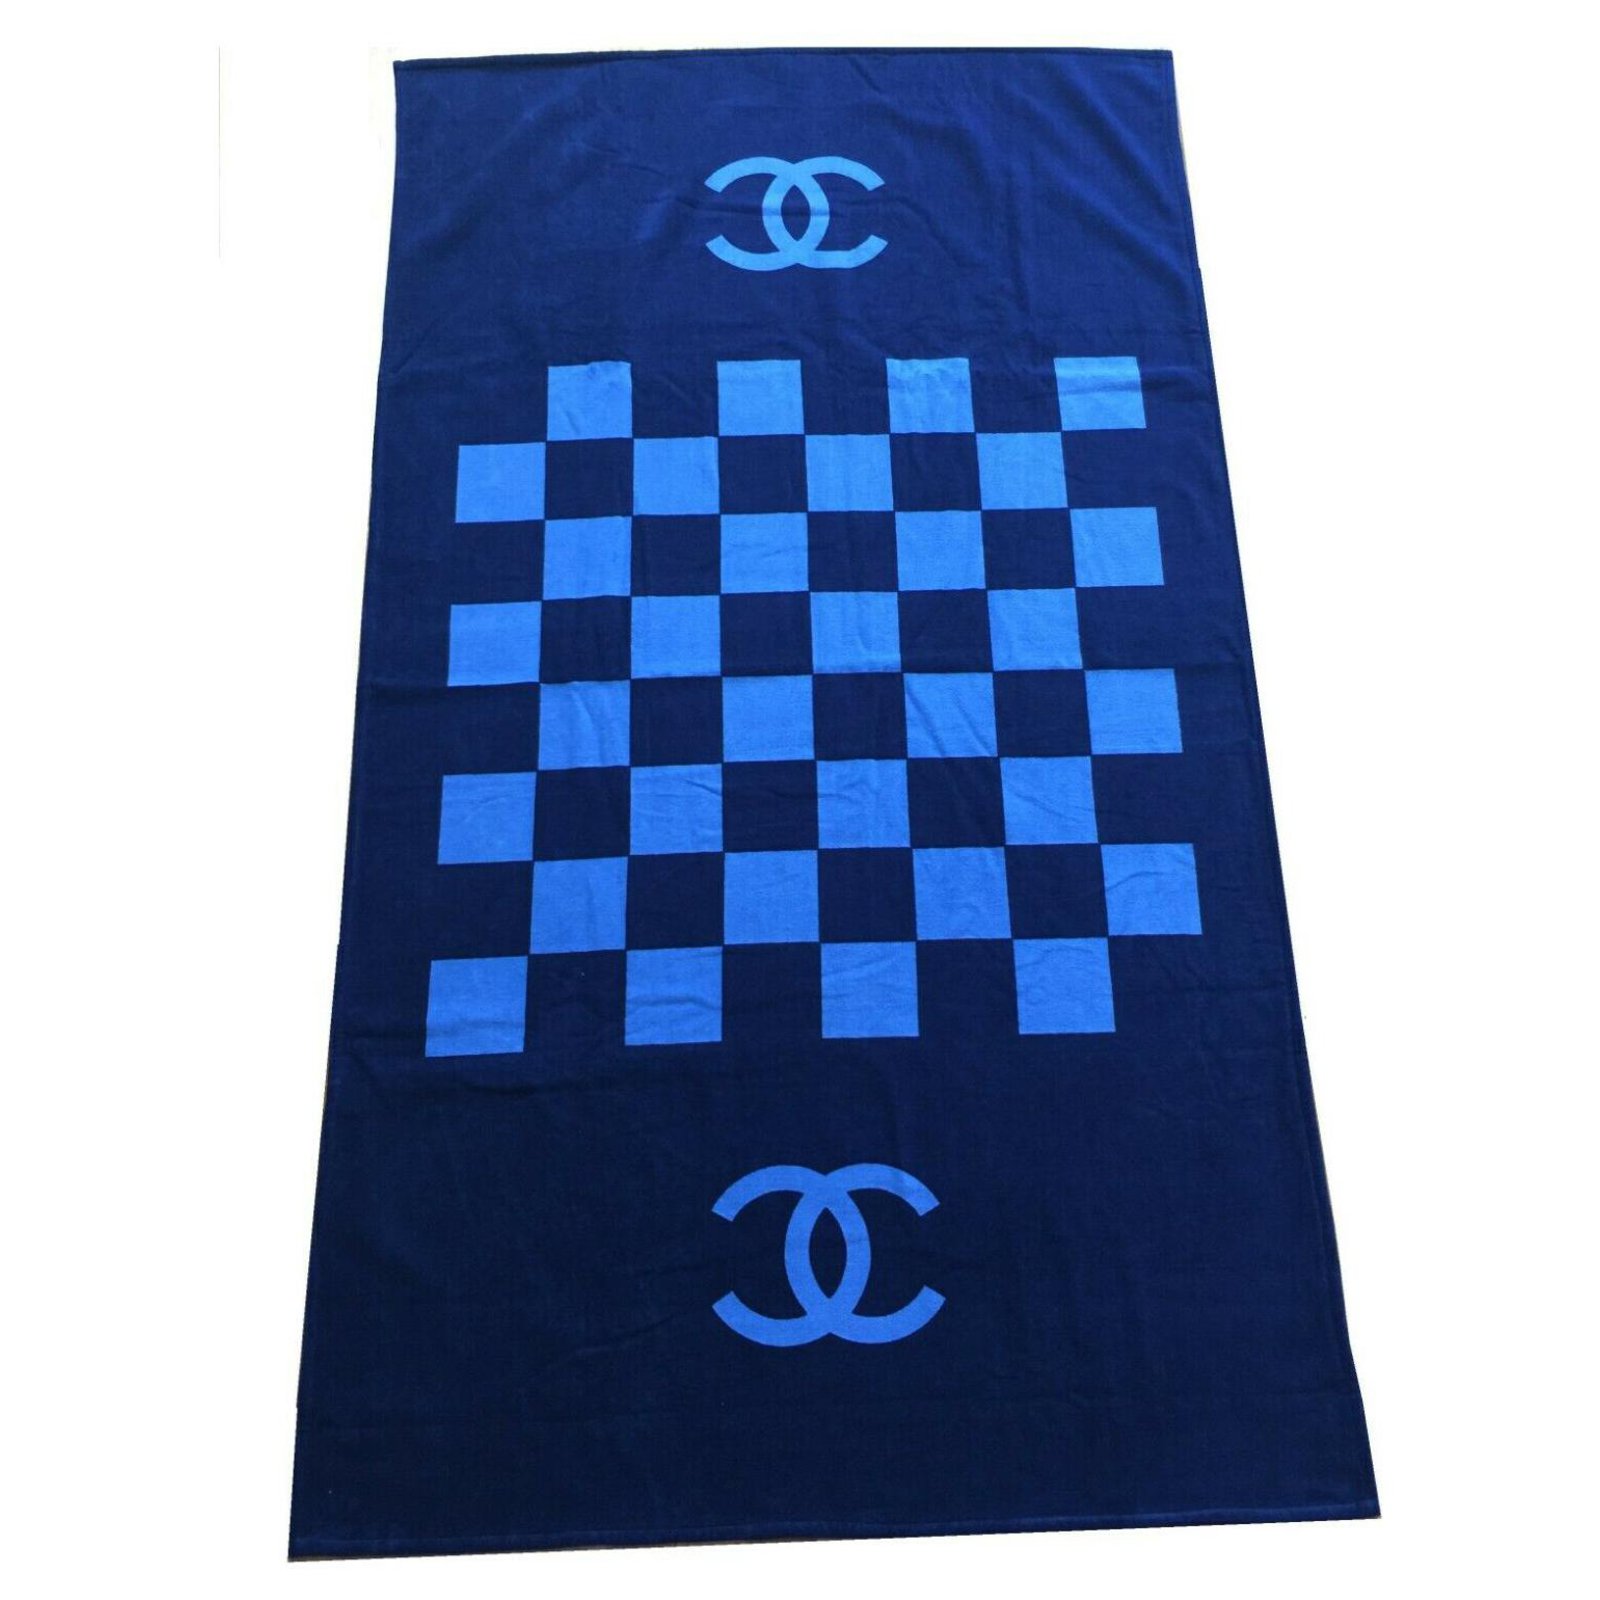 Chanel Blue Beach Tote & Towel Set